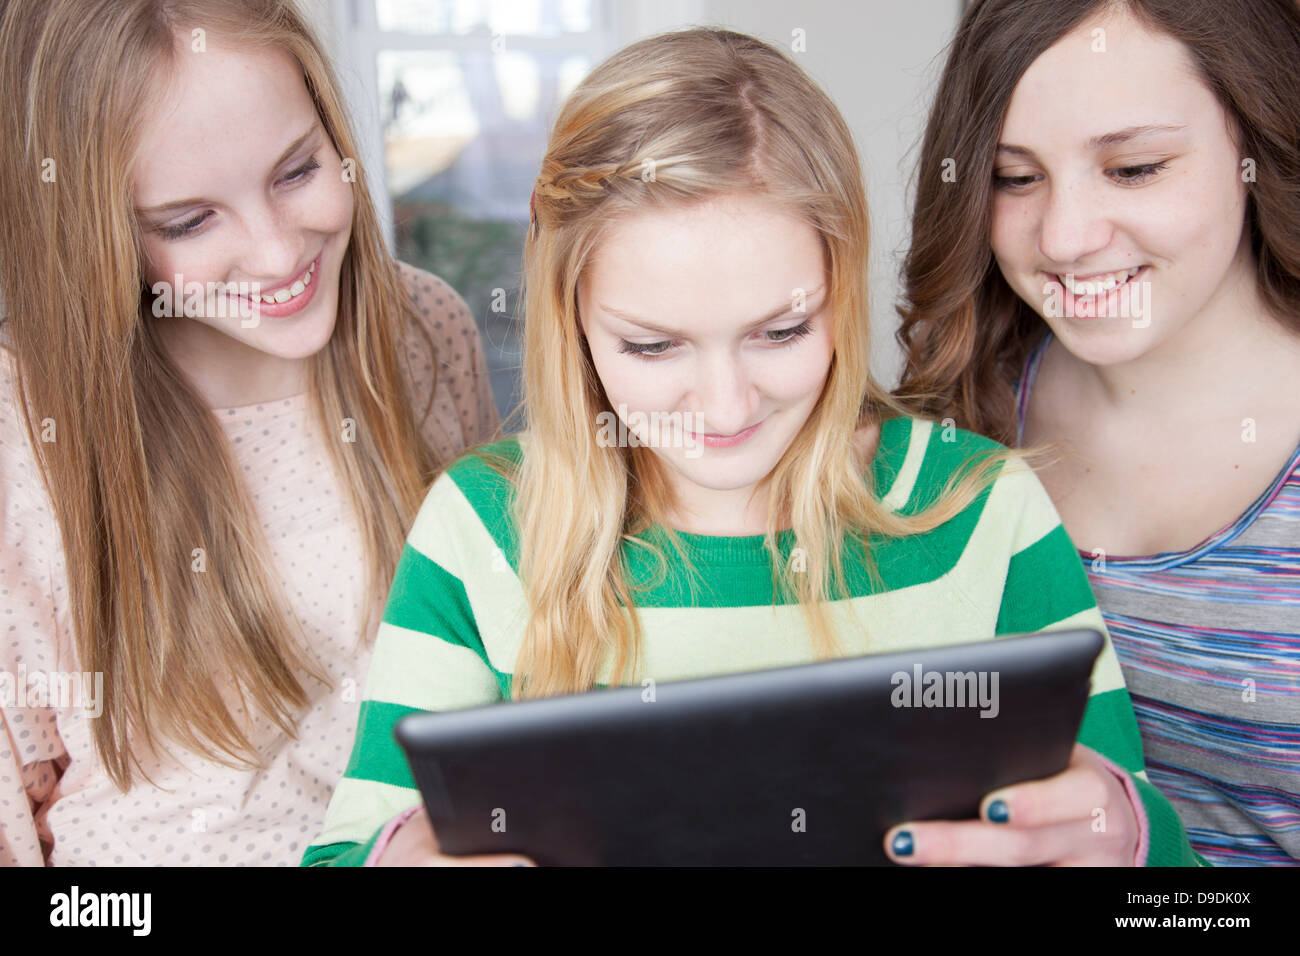 Girls looking at digital tablet Stock Photo